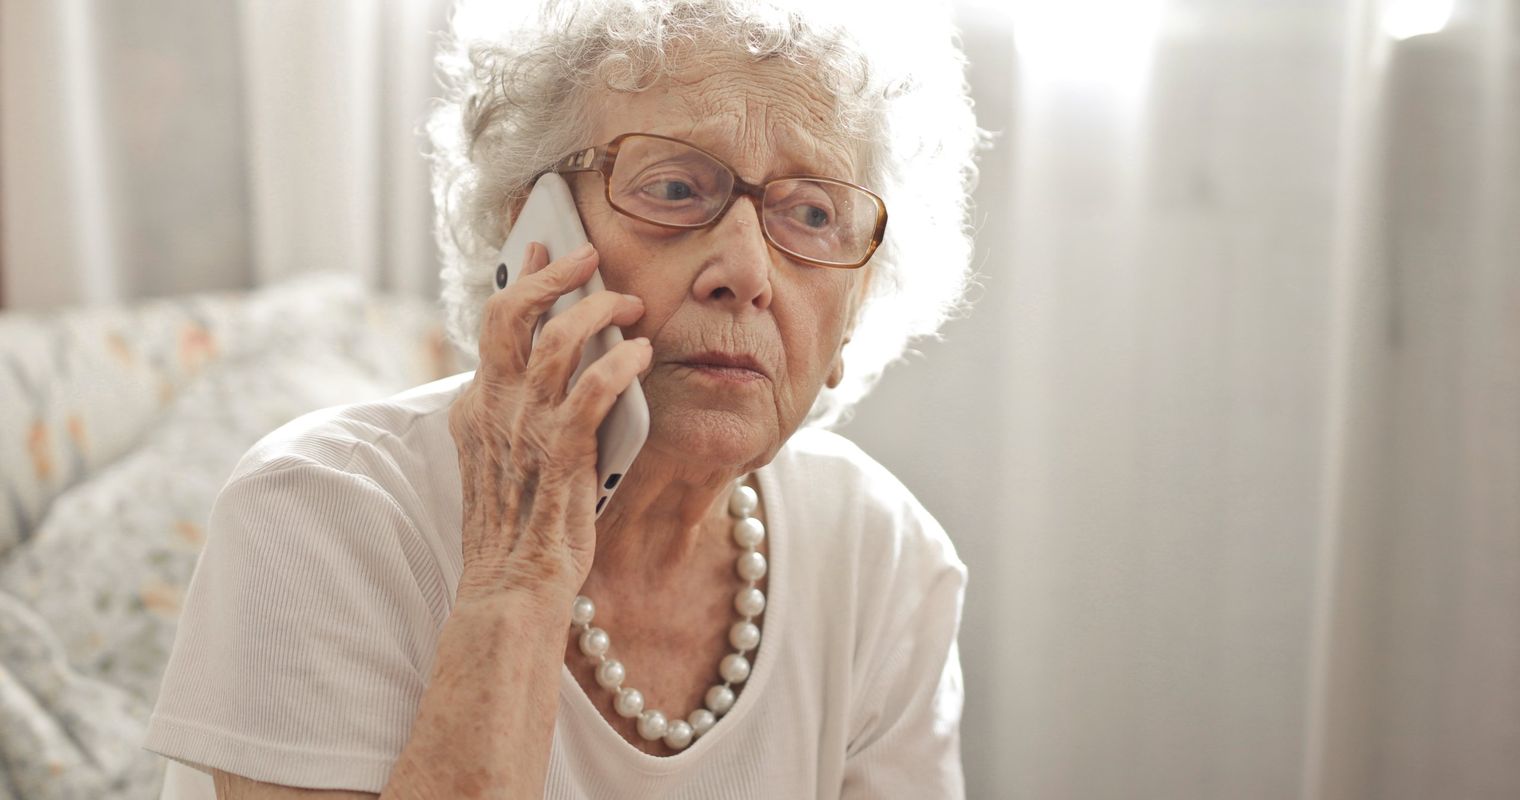 Zuger Seniorin kriecht Telefonbetrügern auf den Leim